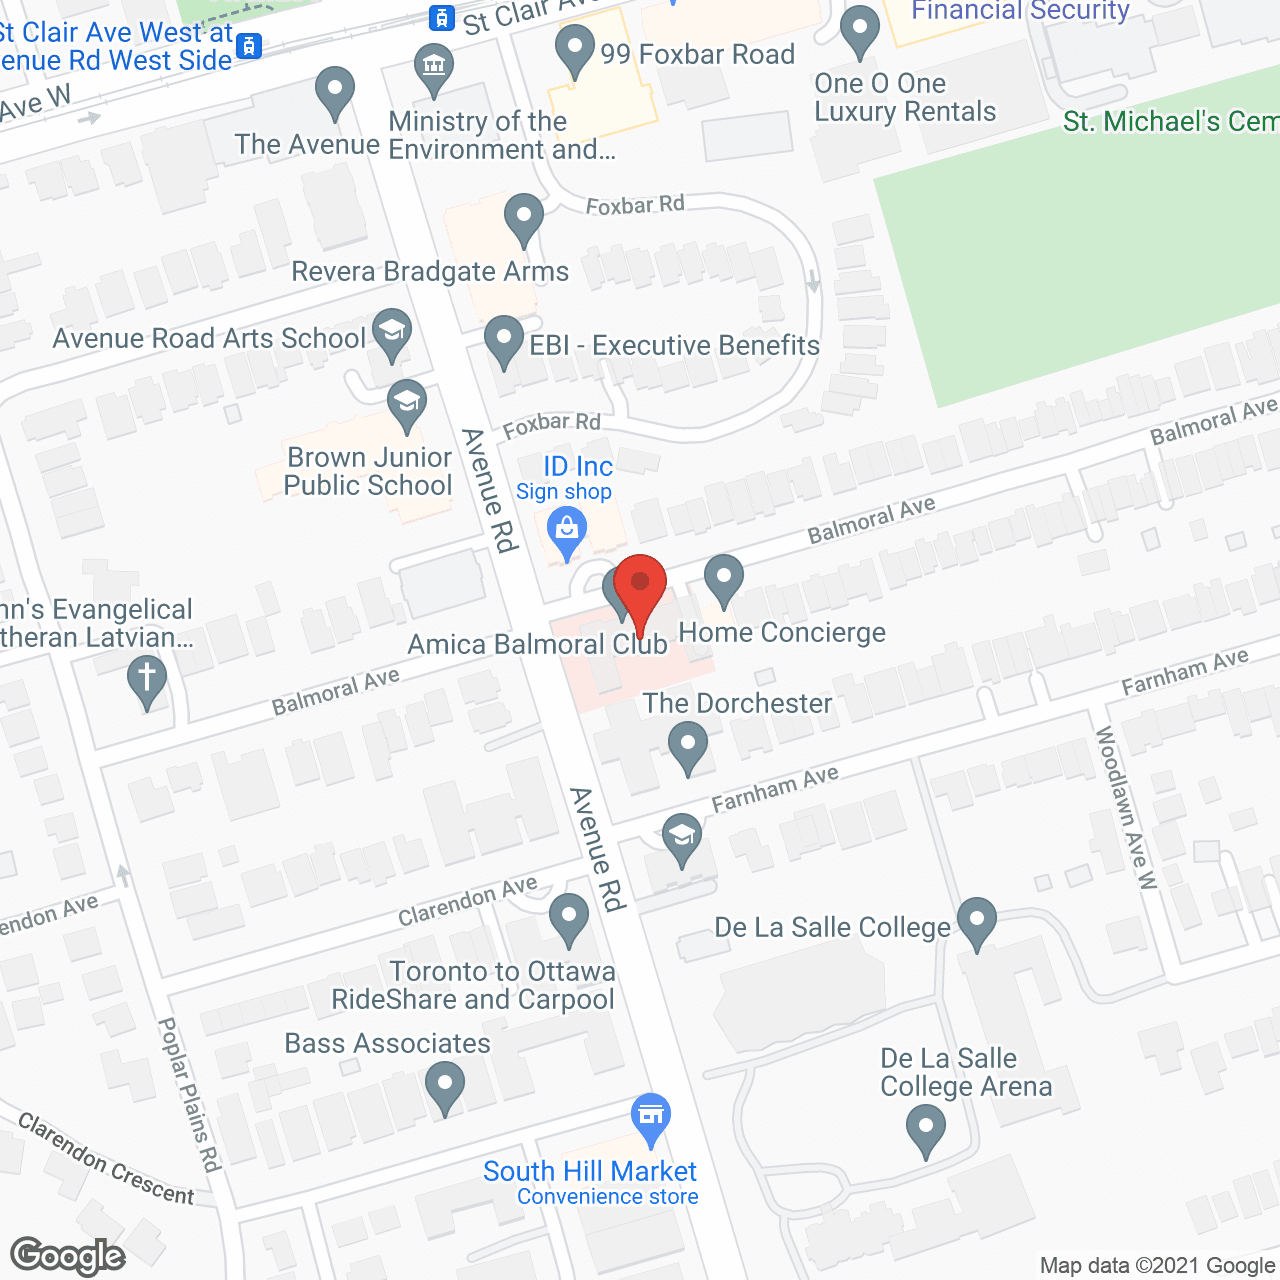 Amica Balmoral Club in google map